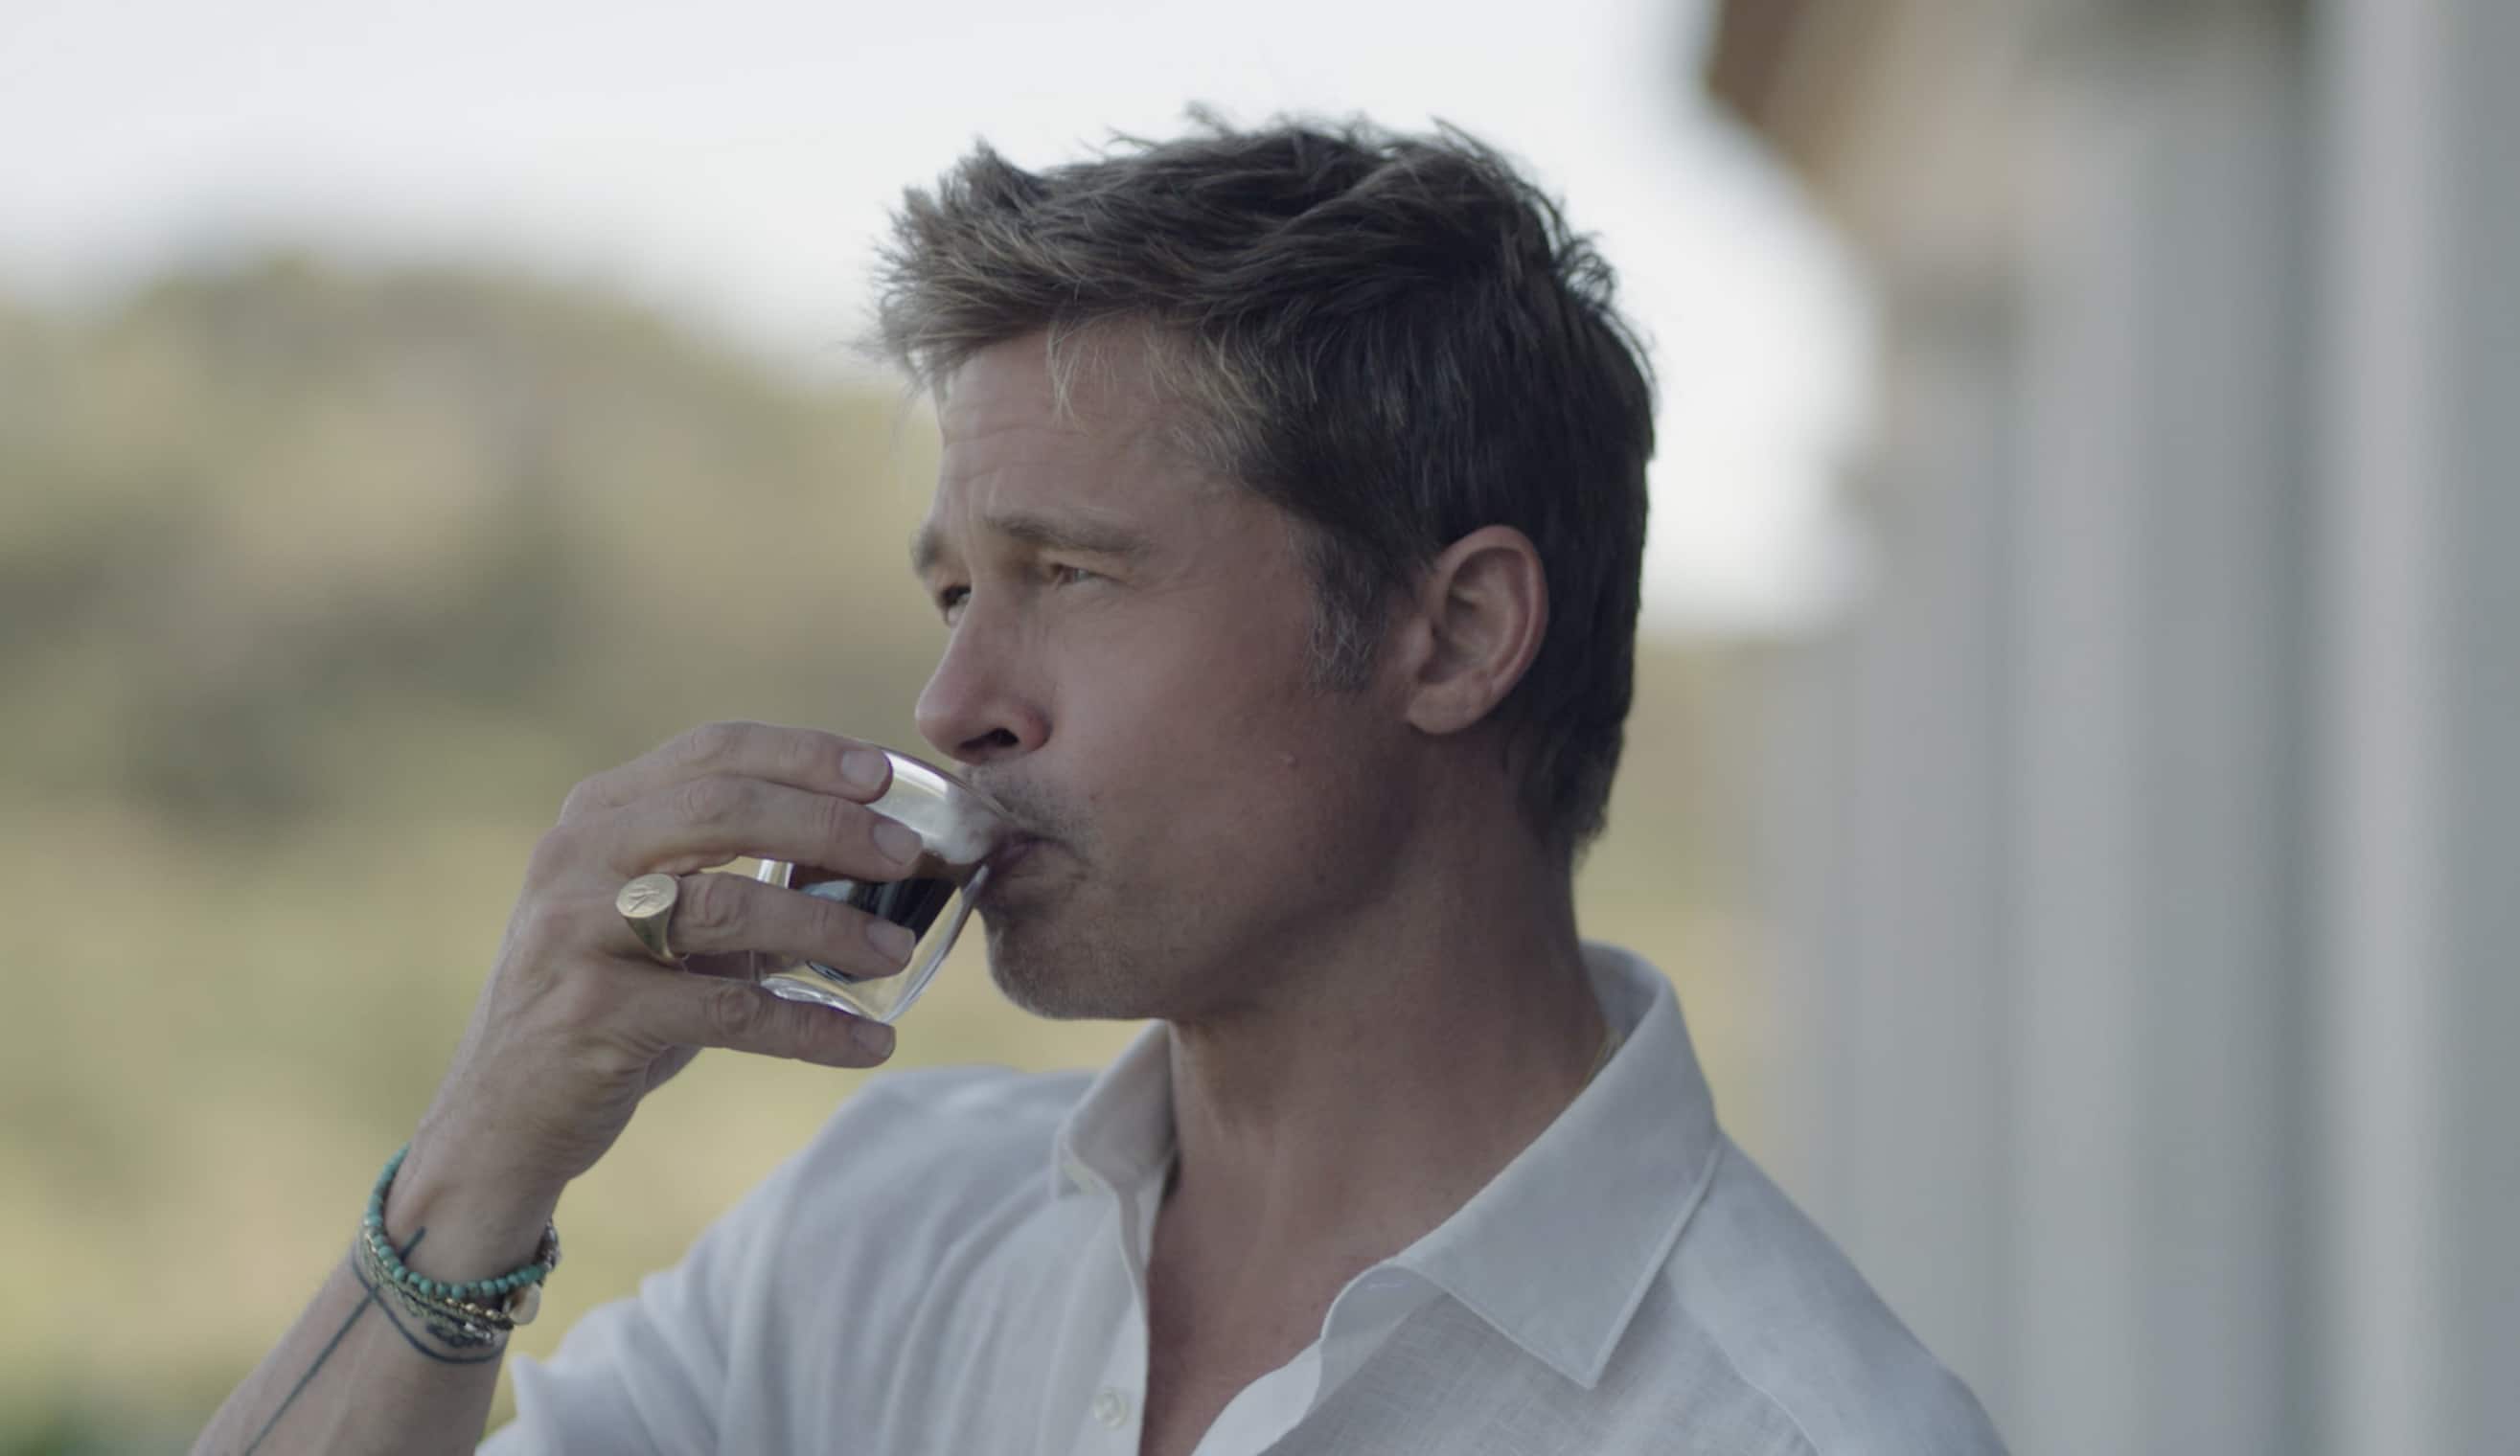 Brad Pitt stars in the new TrueBrew commercial by De'Longhi